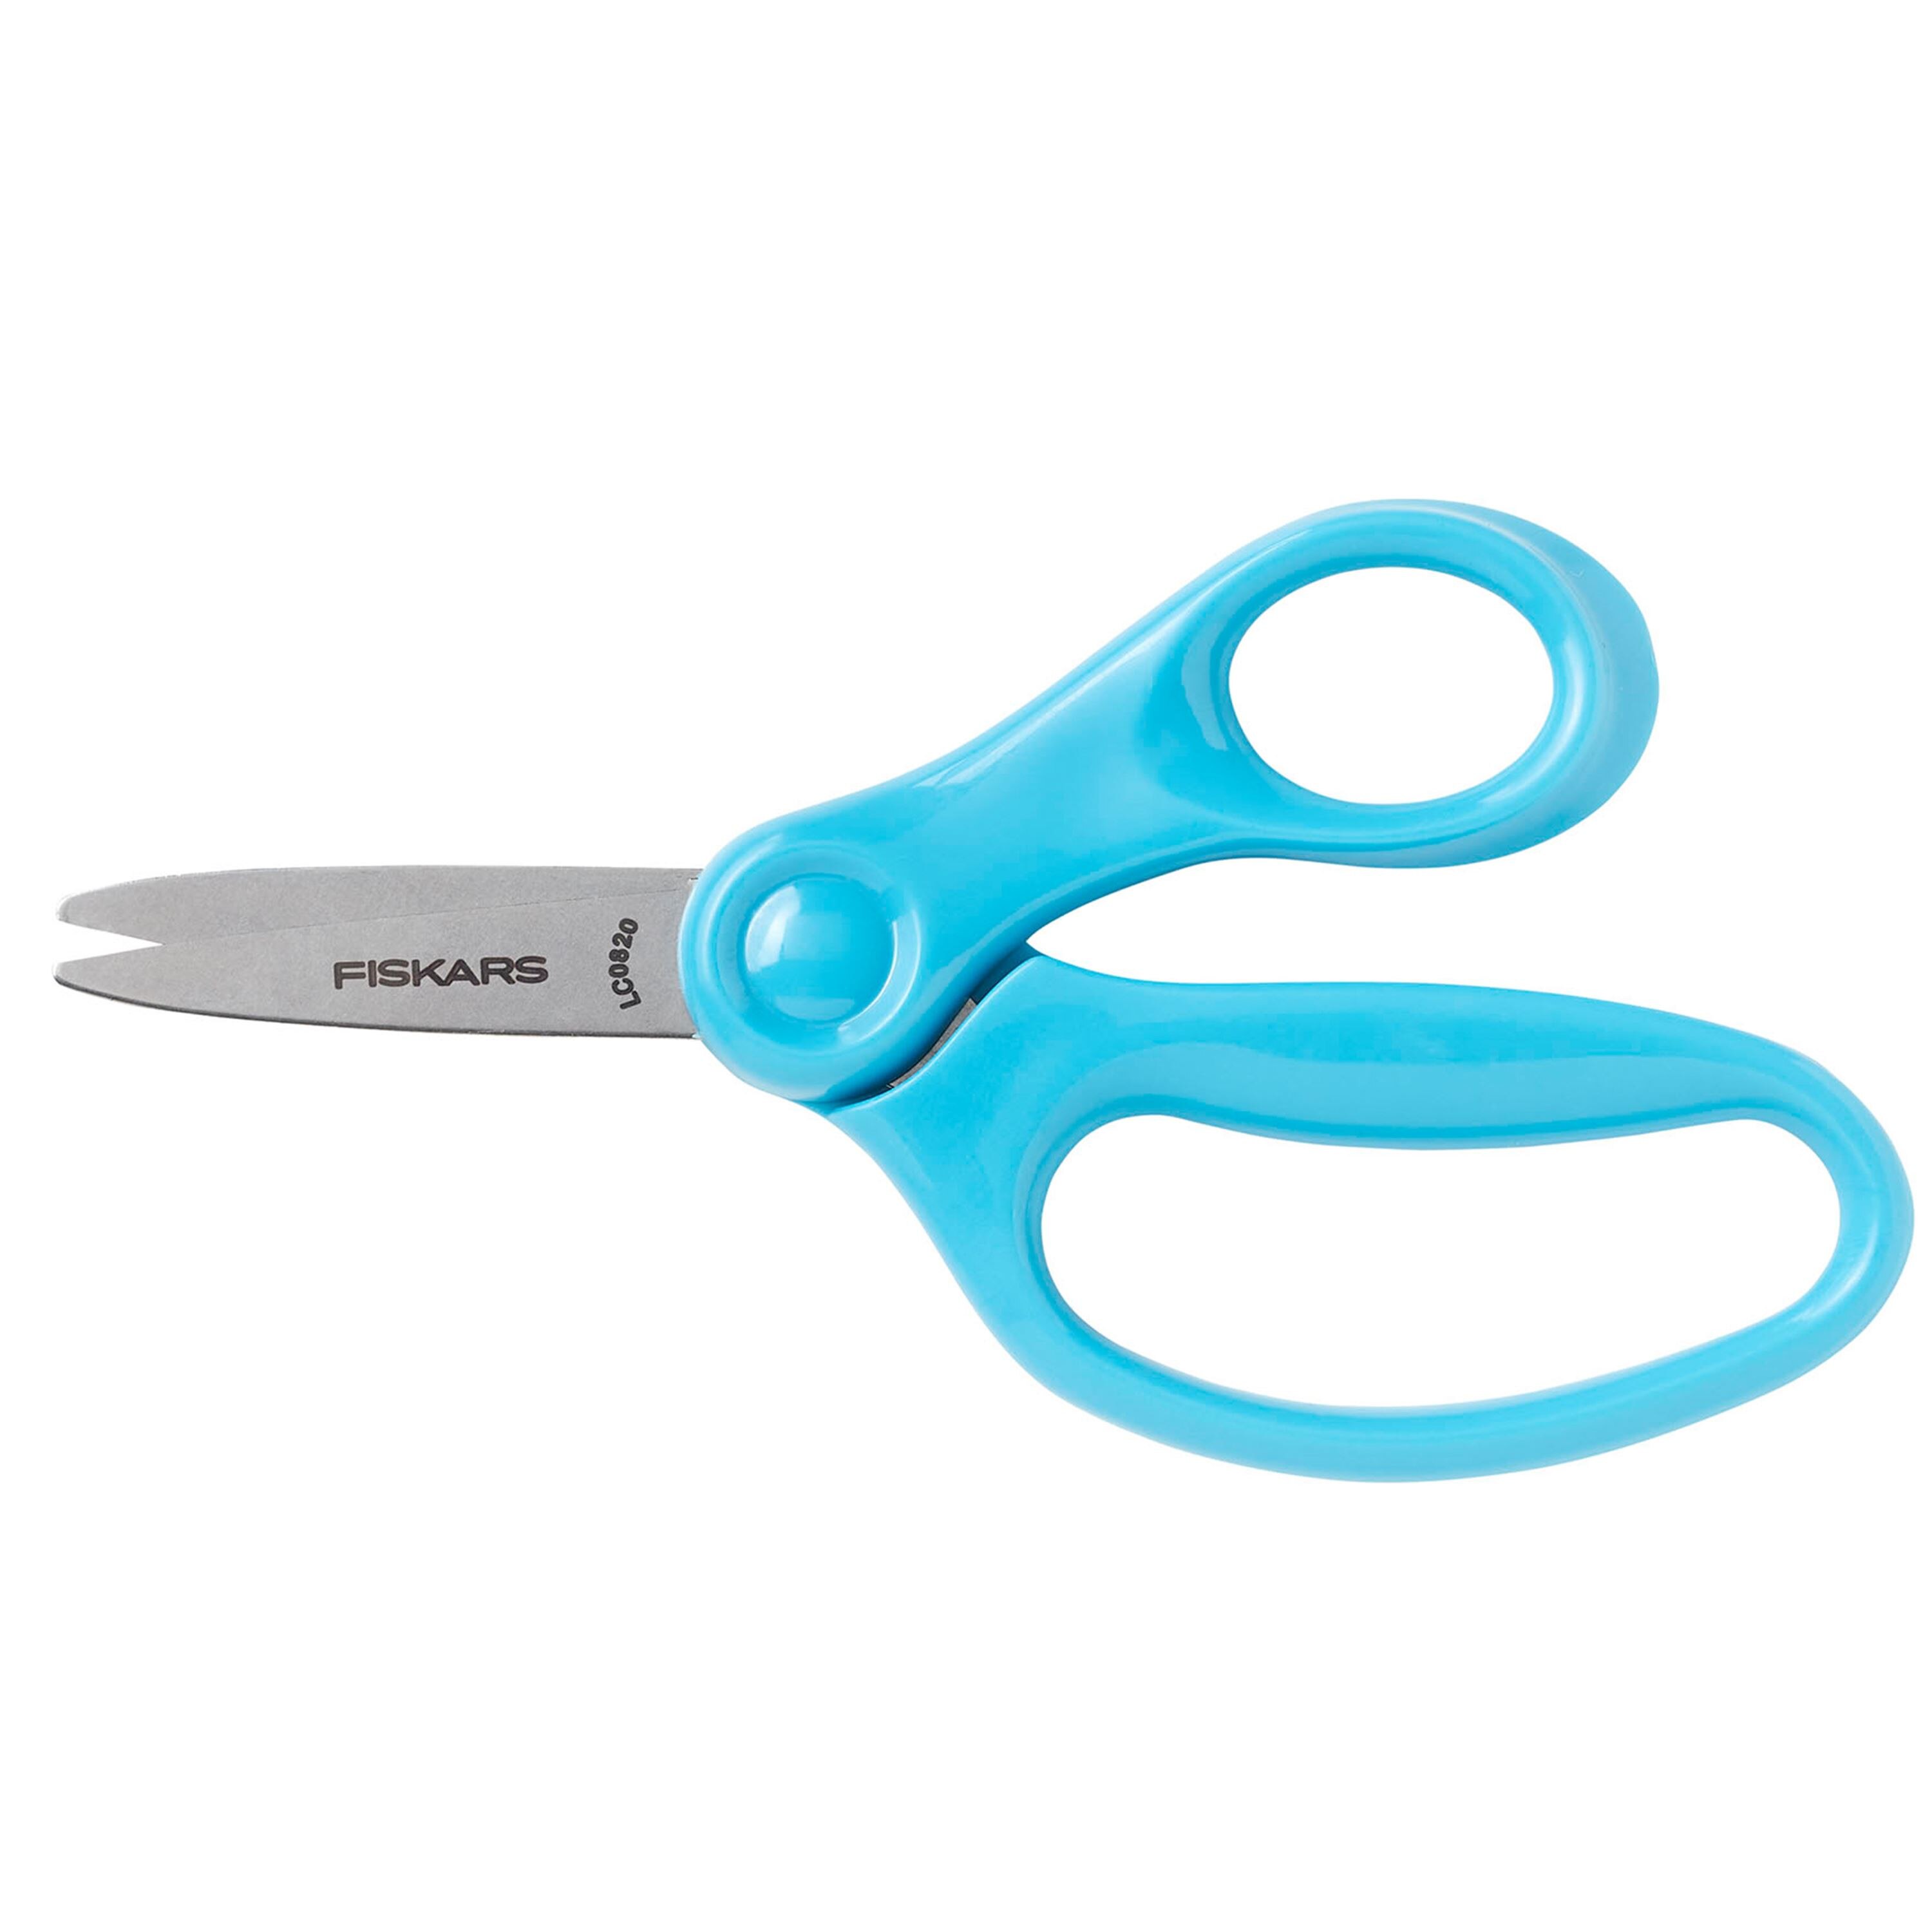 Fiskars school scissors, student scissors and training scissors